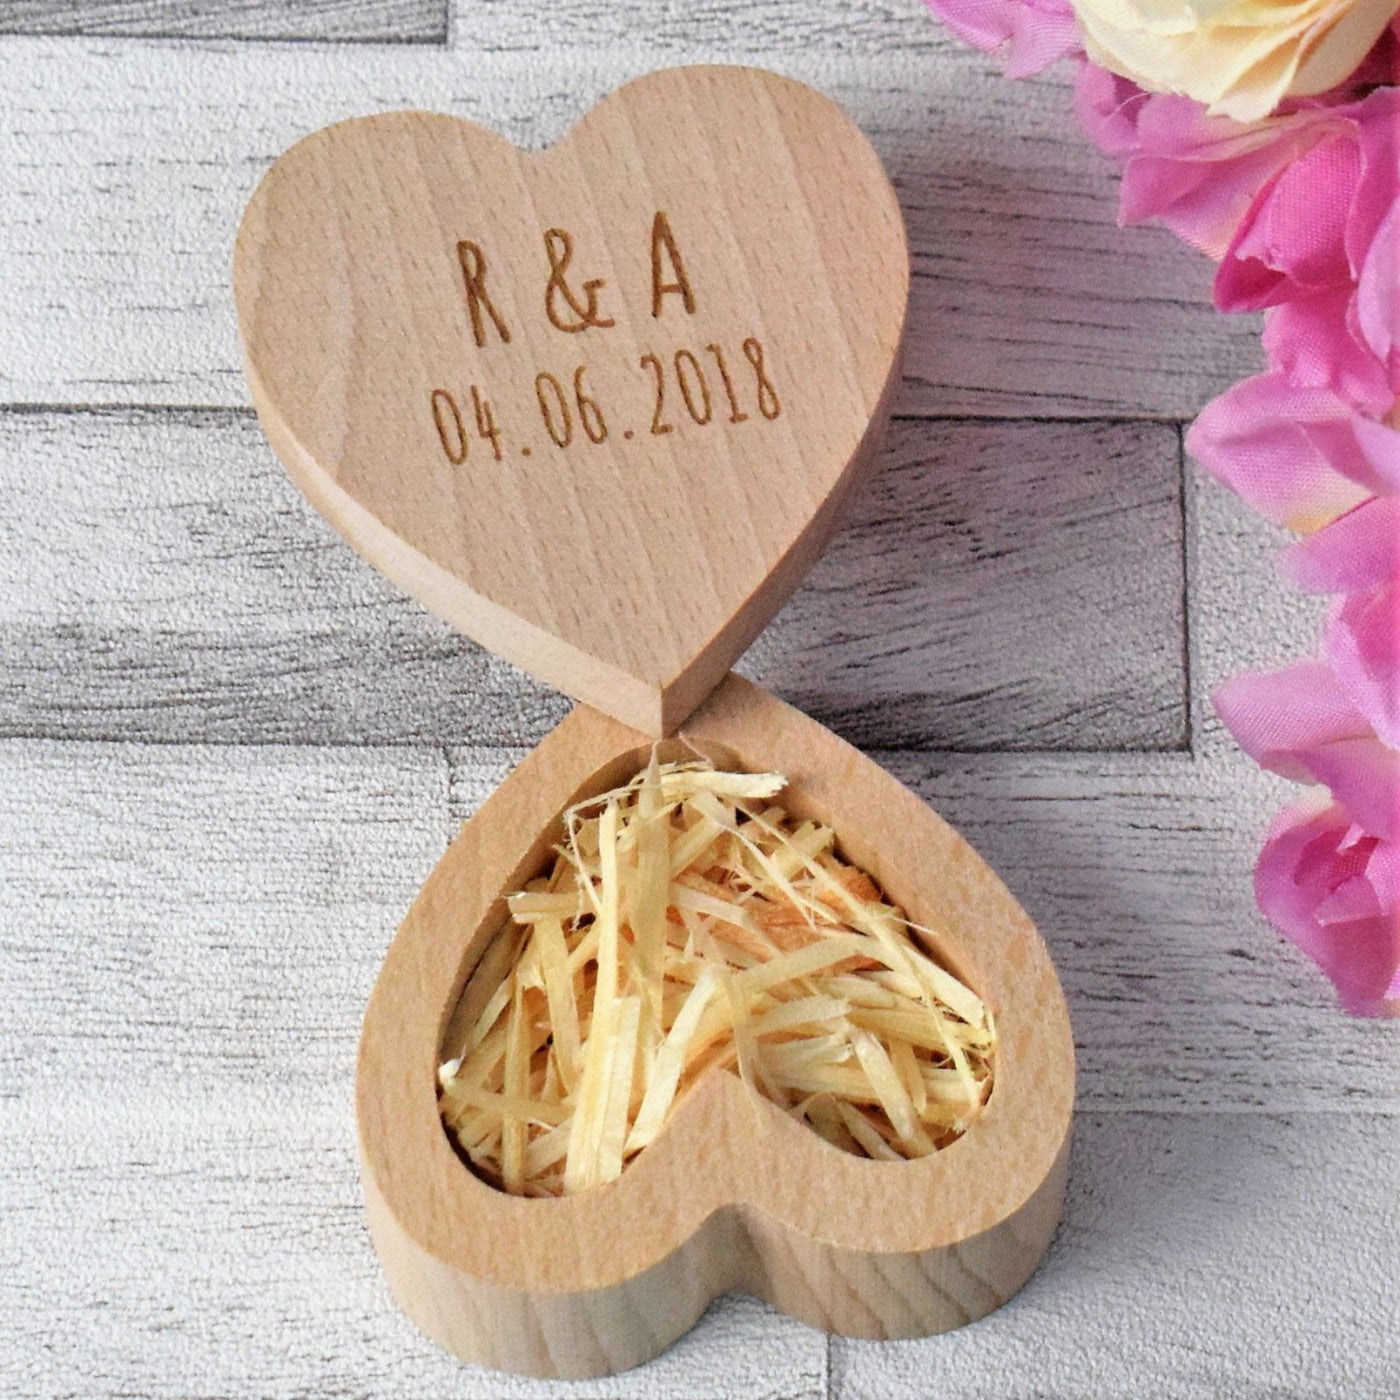 Personalised Wedding Ring Box - Engraved Wedding Ring Box Rustic Heart Shaped Wooden Ring Box - Wedding Day, Bride & Groom